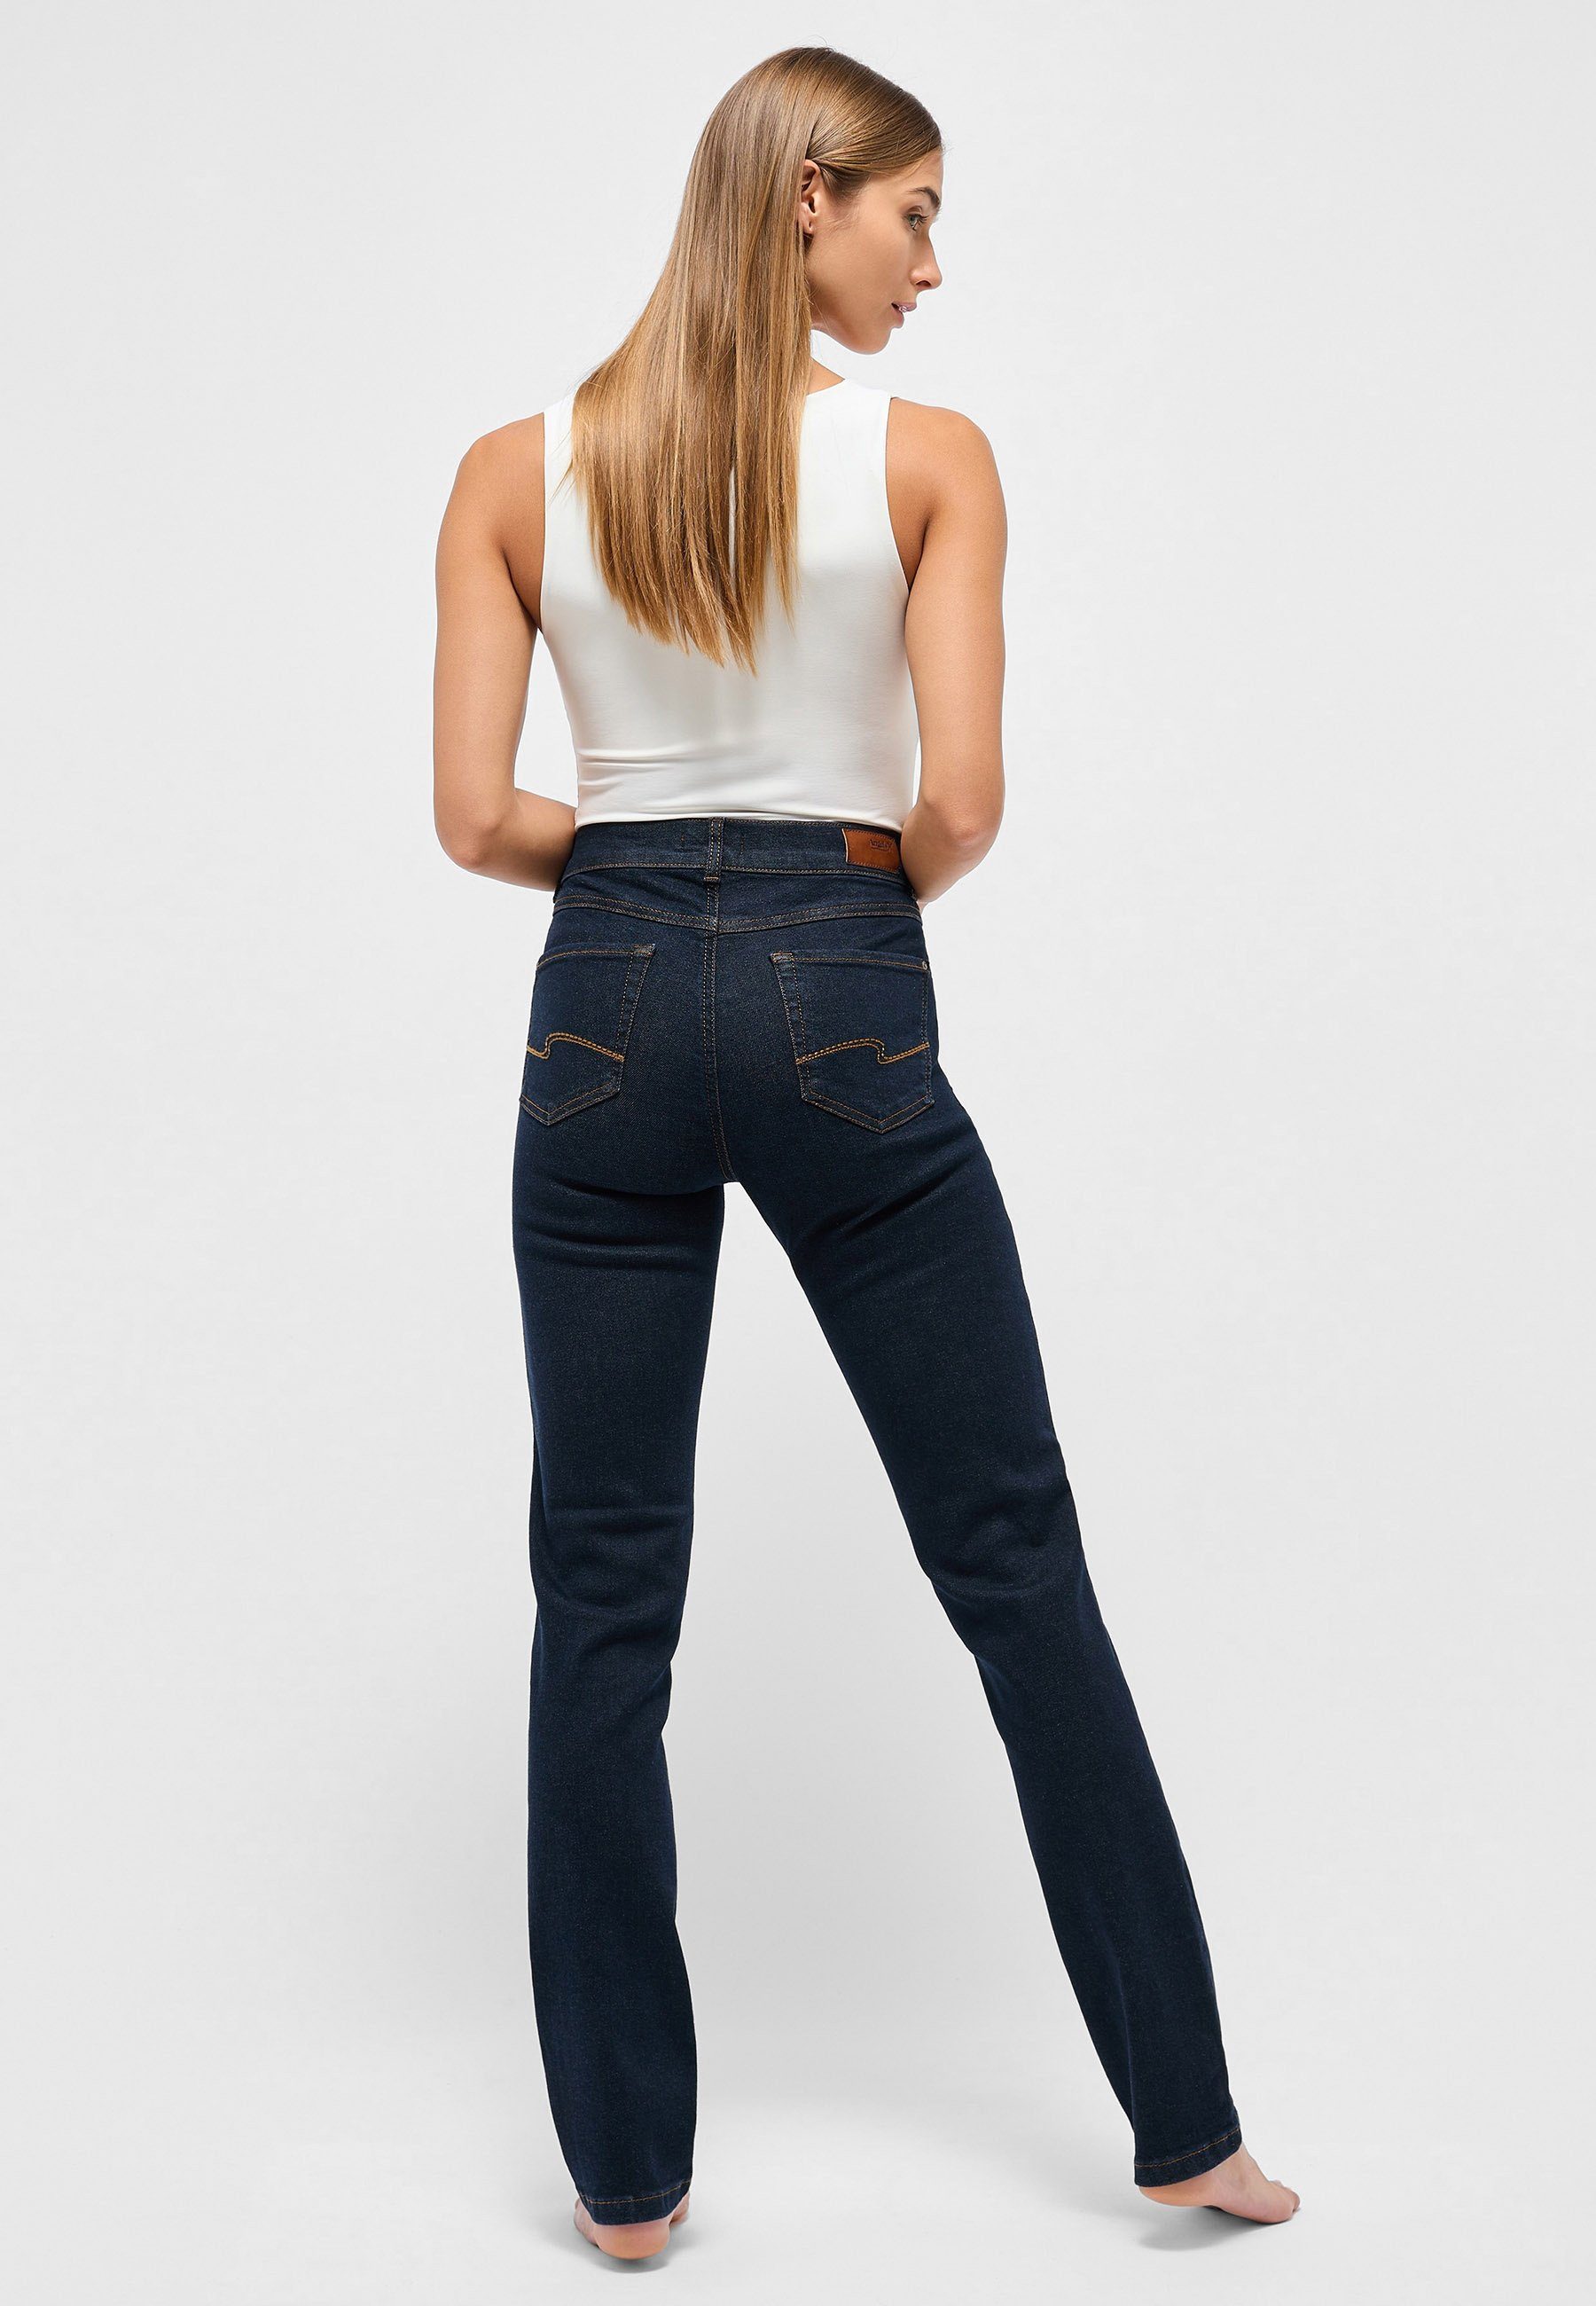 ANGELS Straight-Jeans Jeans mit mit Cici Label-Applikationen dunkelblau Used-Waschung